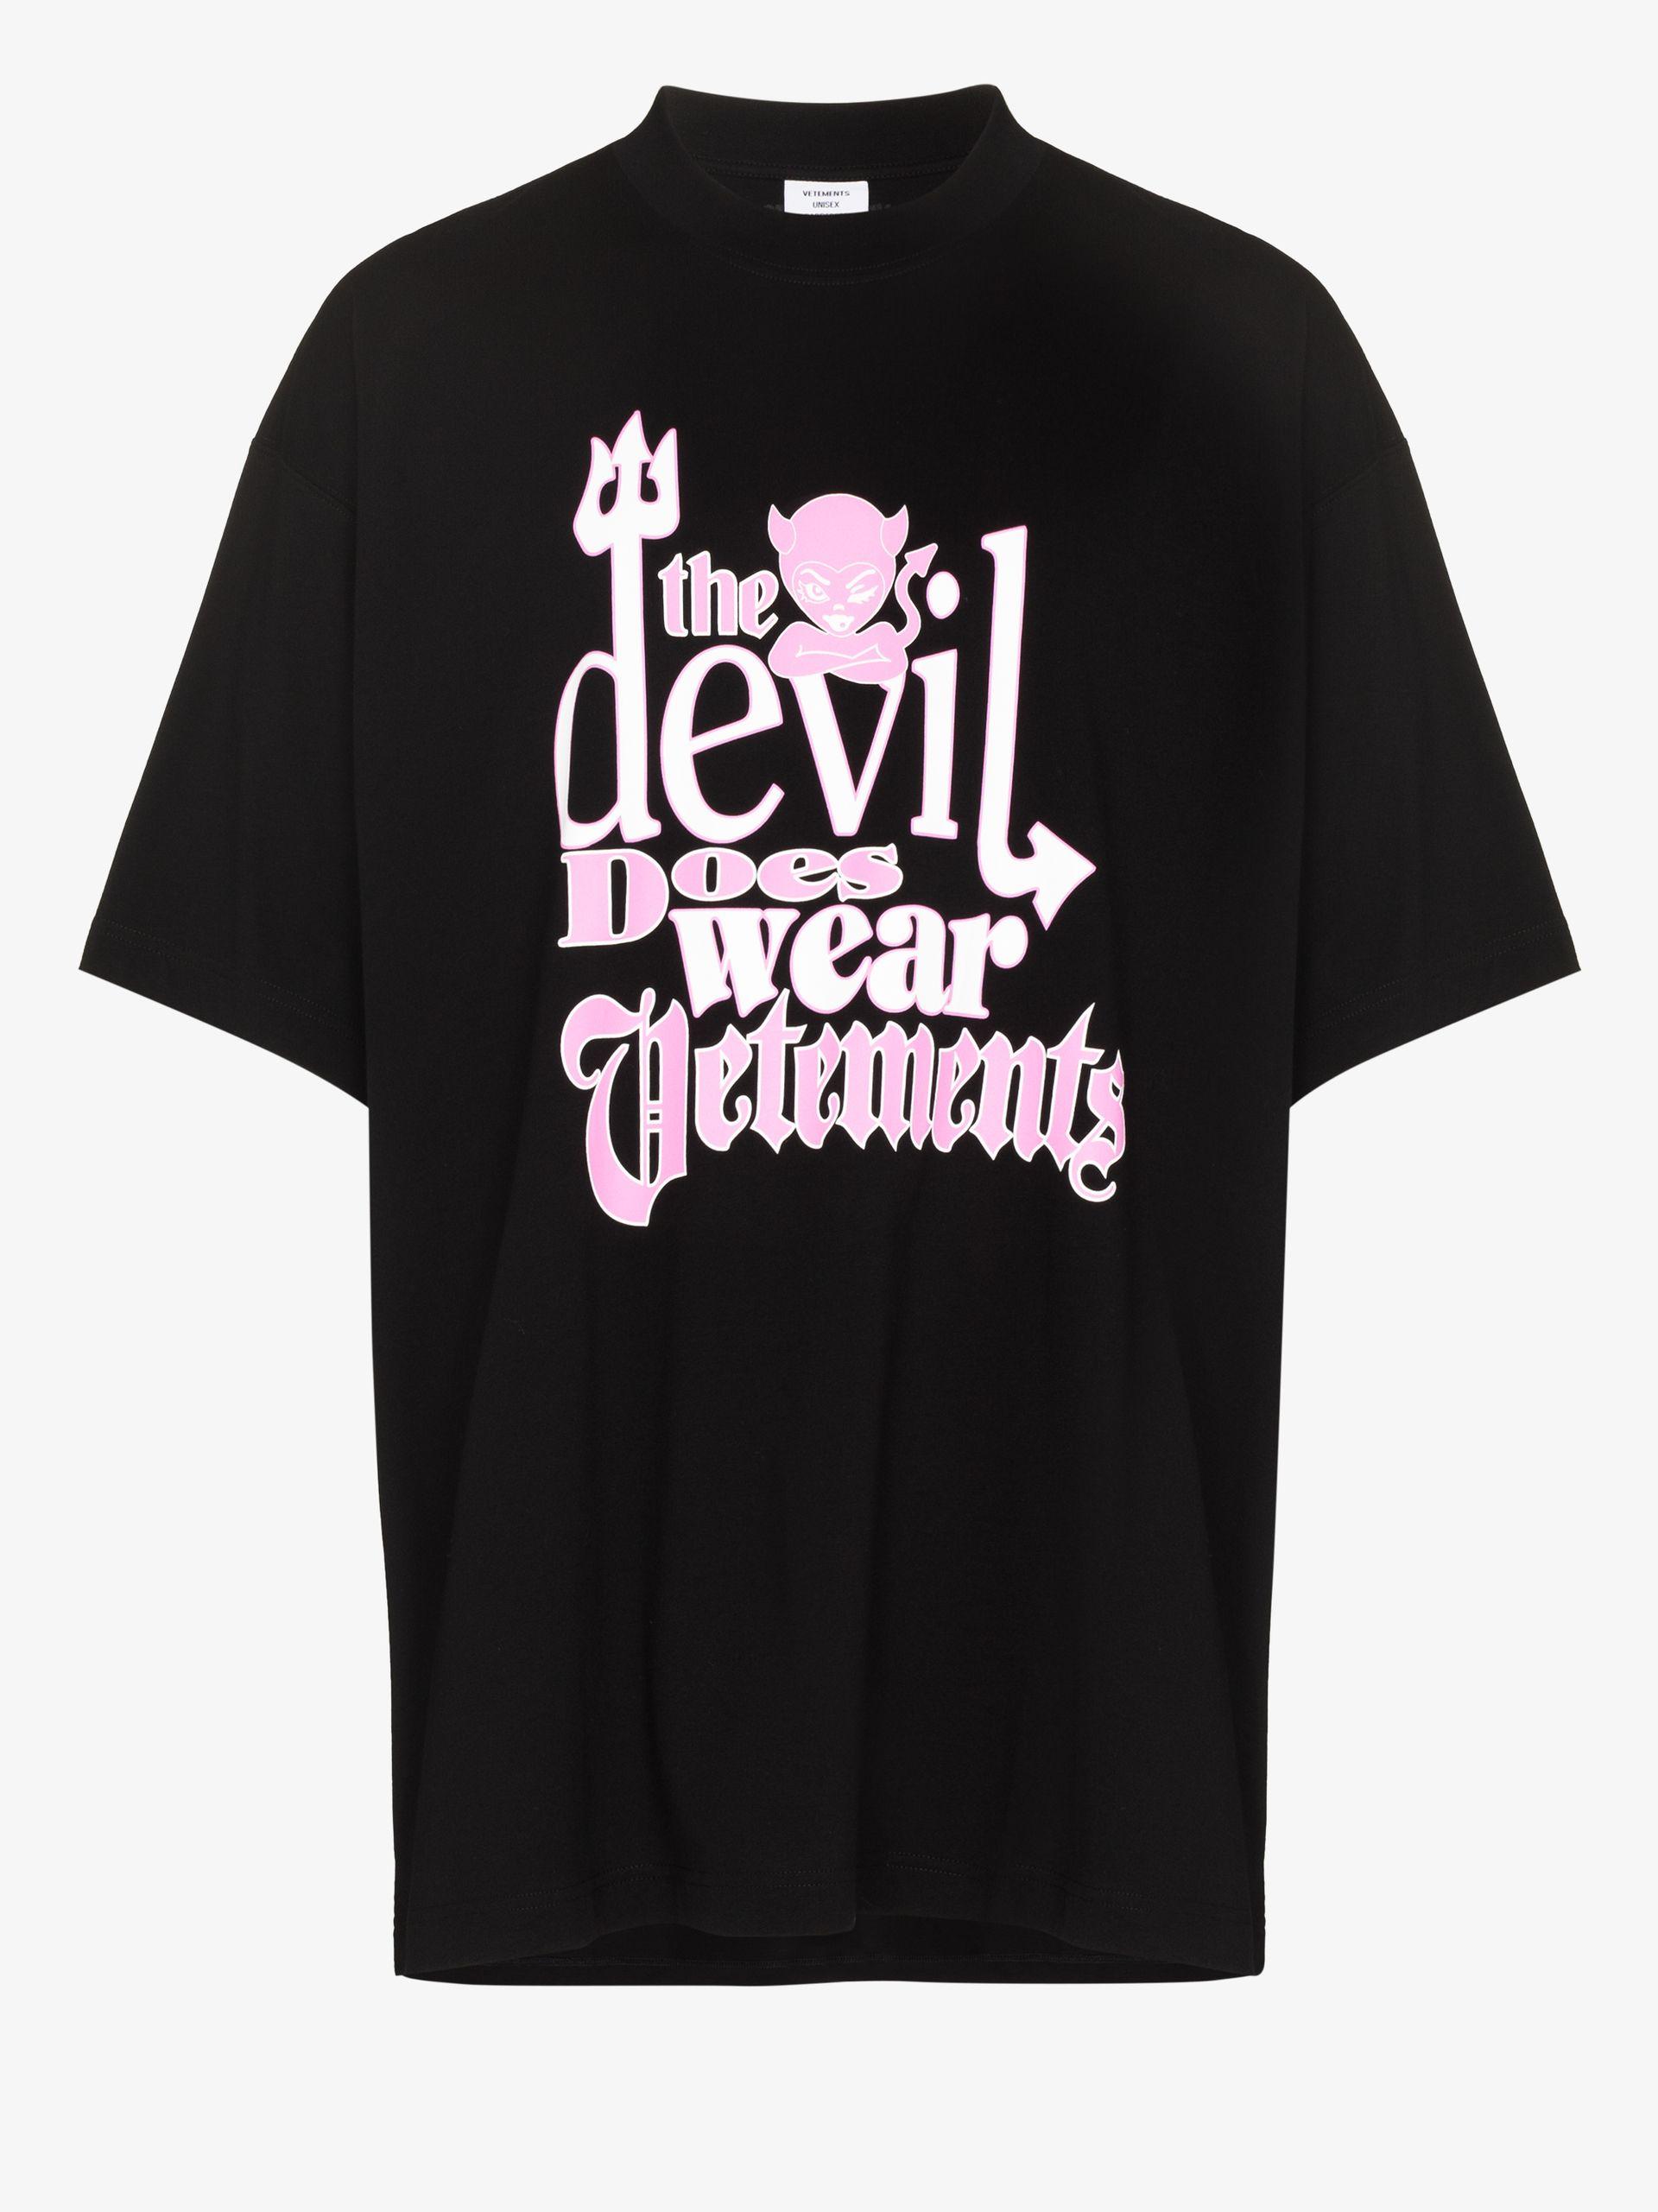 Vetements Devil Does Wear Print Cotton T-shirt in Black for Men - Lyst